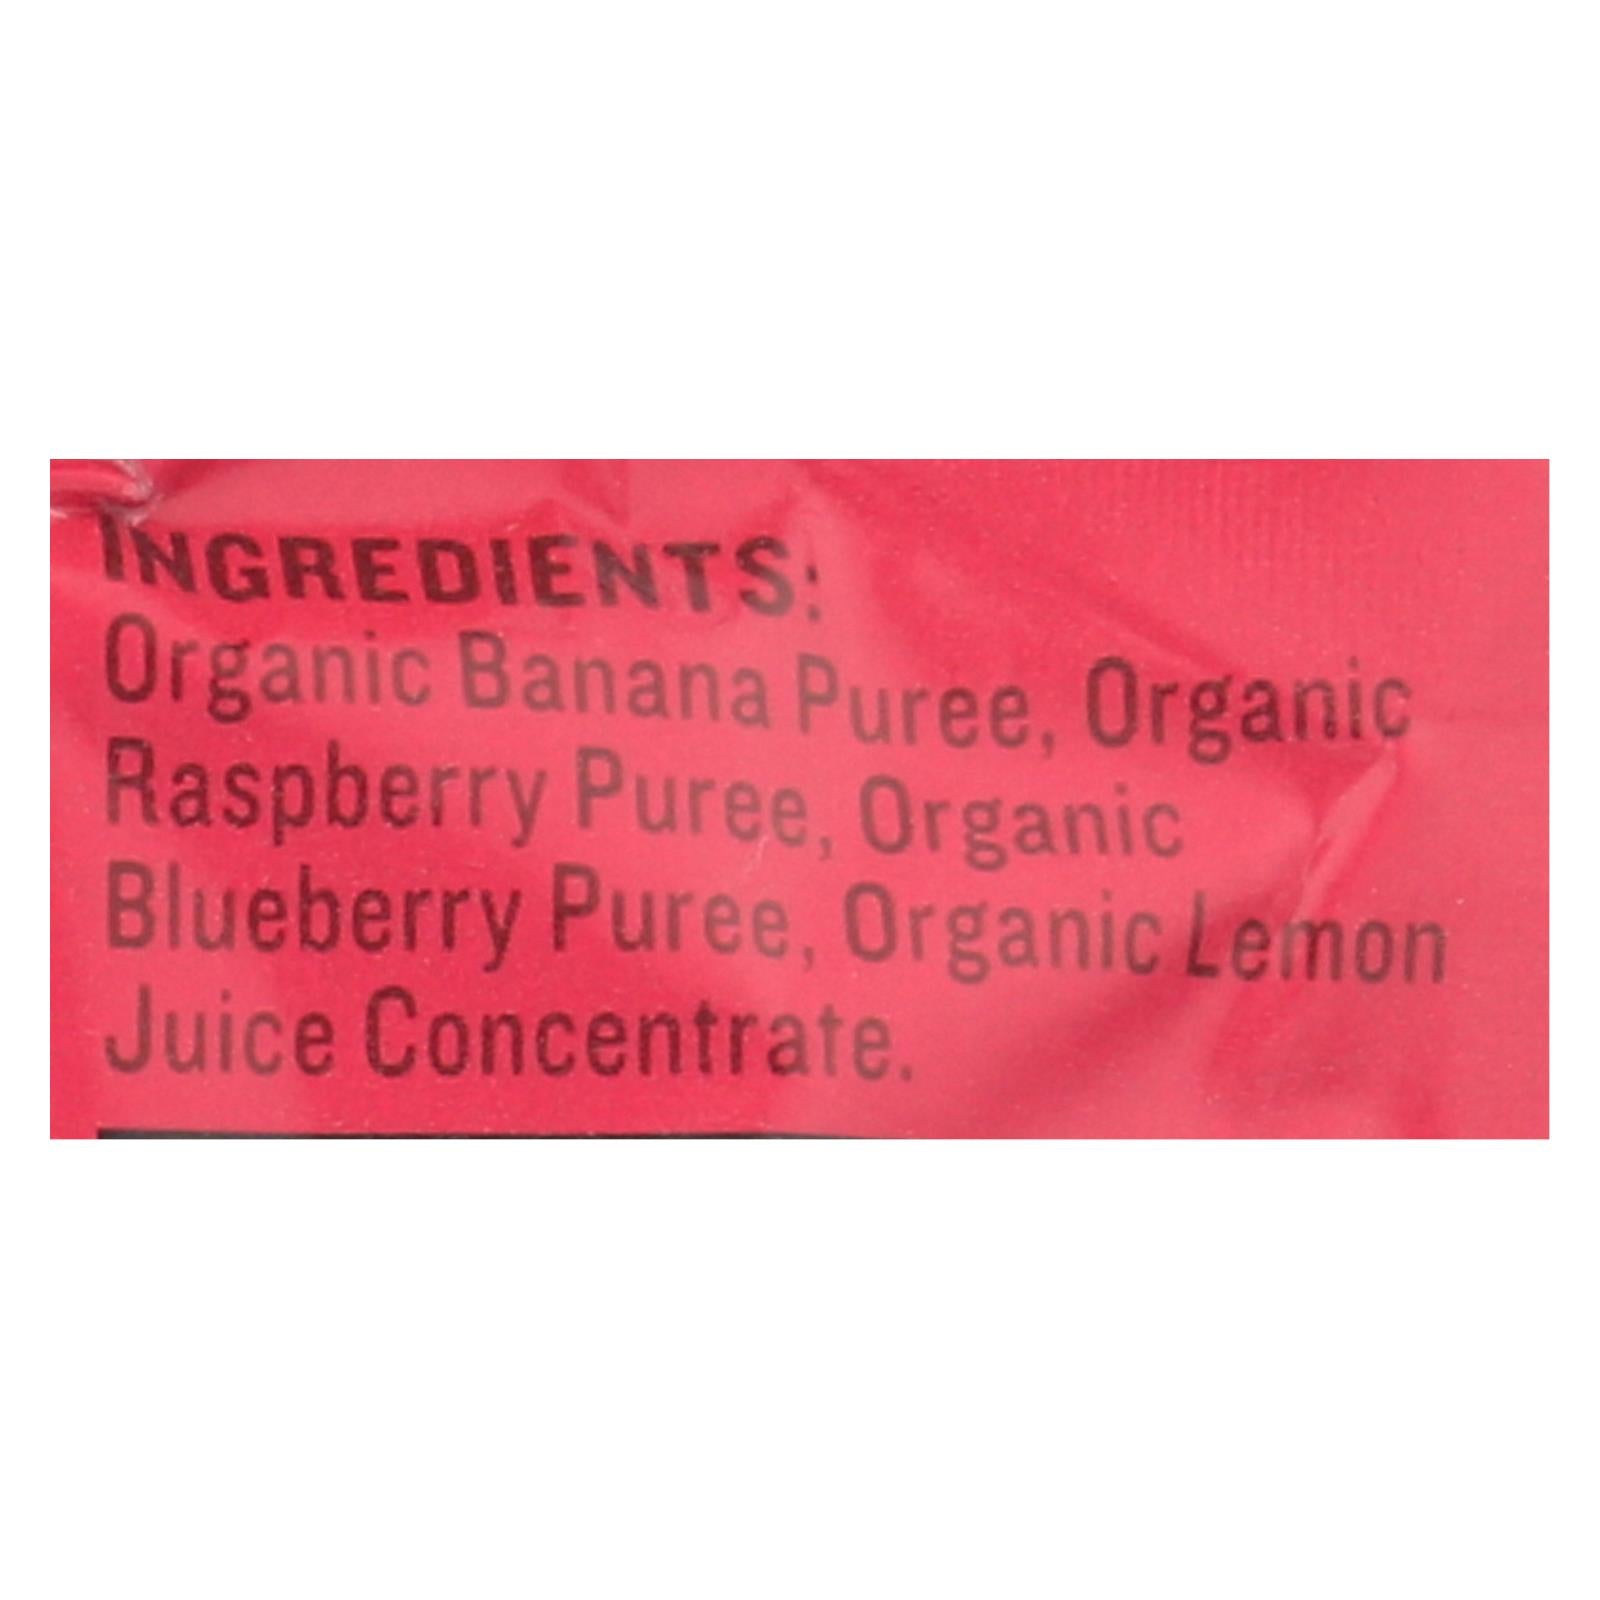 Peter Rabbit Organics Fruit Snacks - Raspberry Banana And Blueberry - Case Of 10 - 4 Oz.